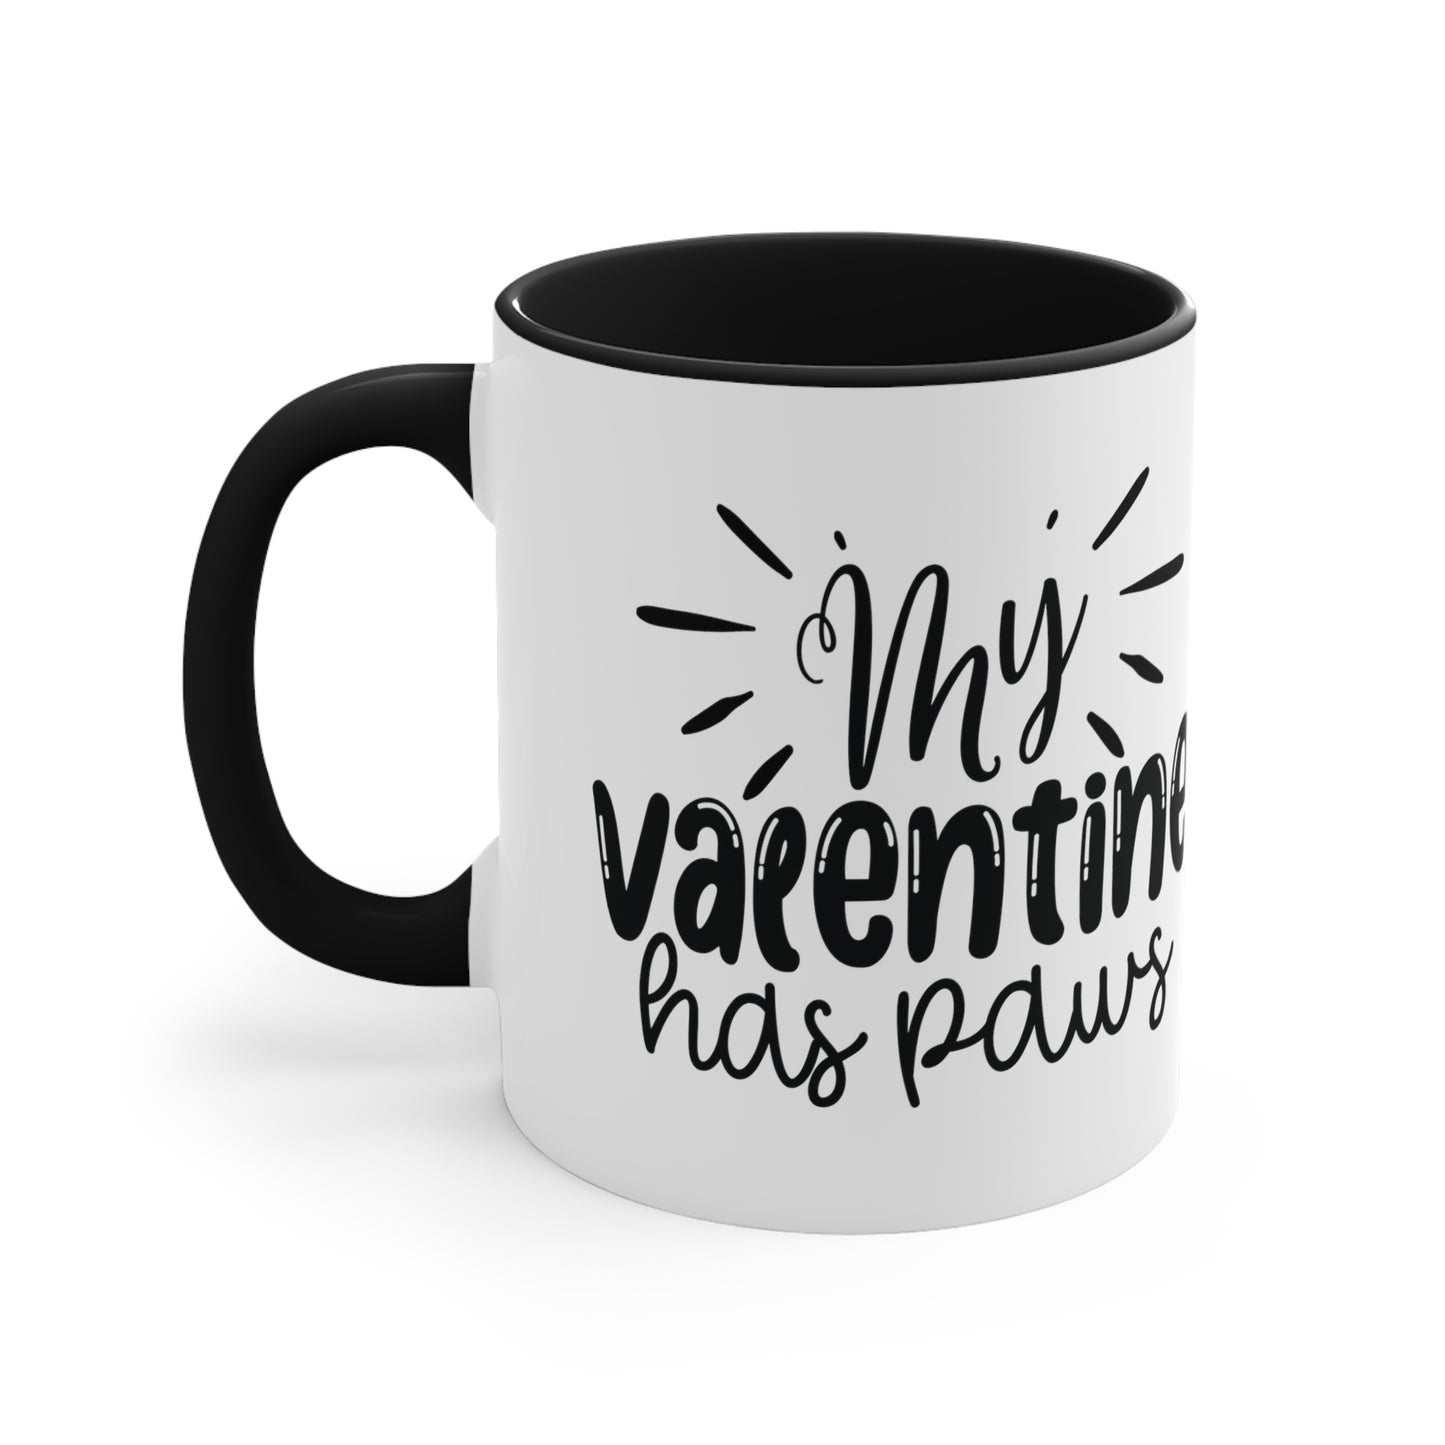 My Valentine Has Paws Accent Coffee Mug, 11oz